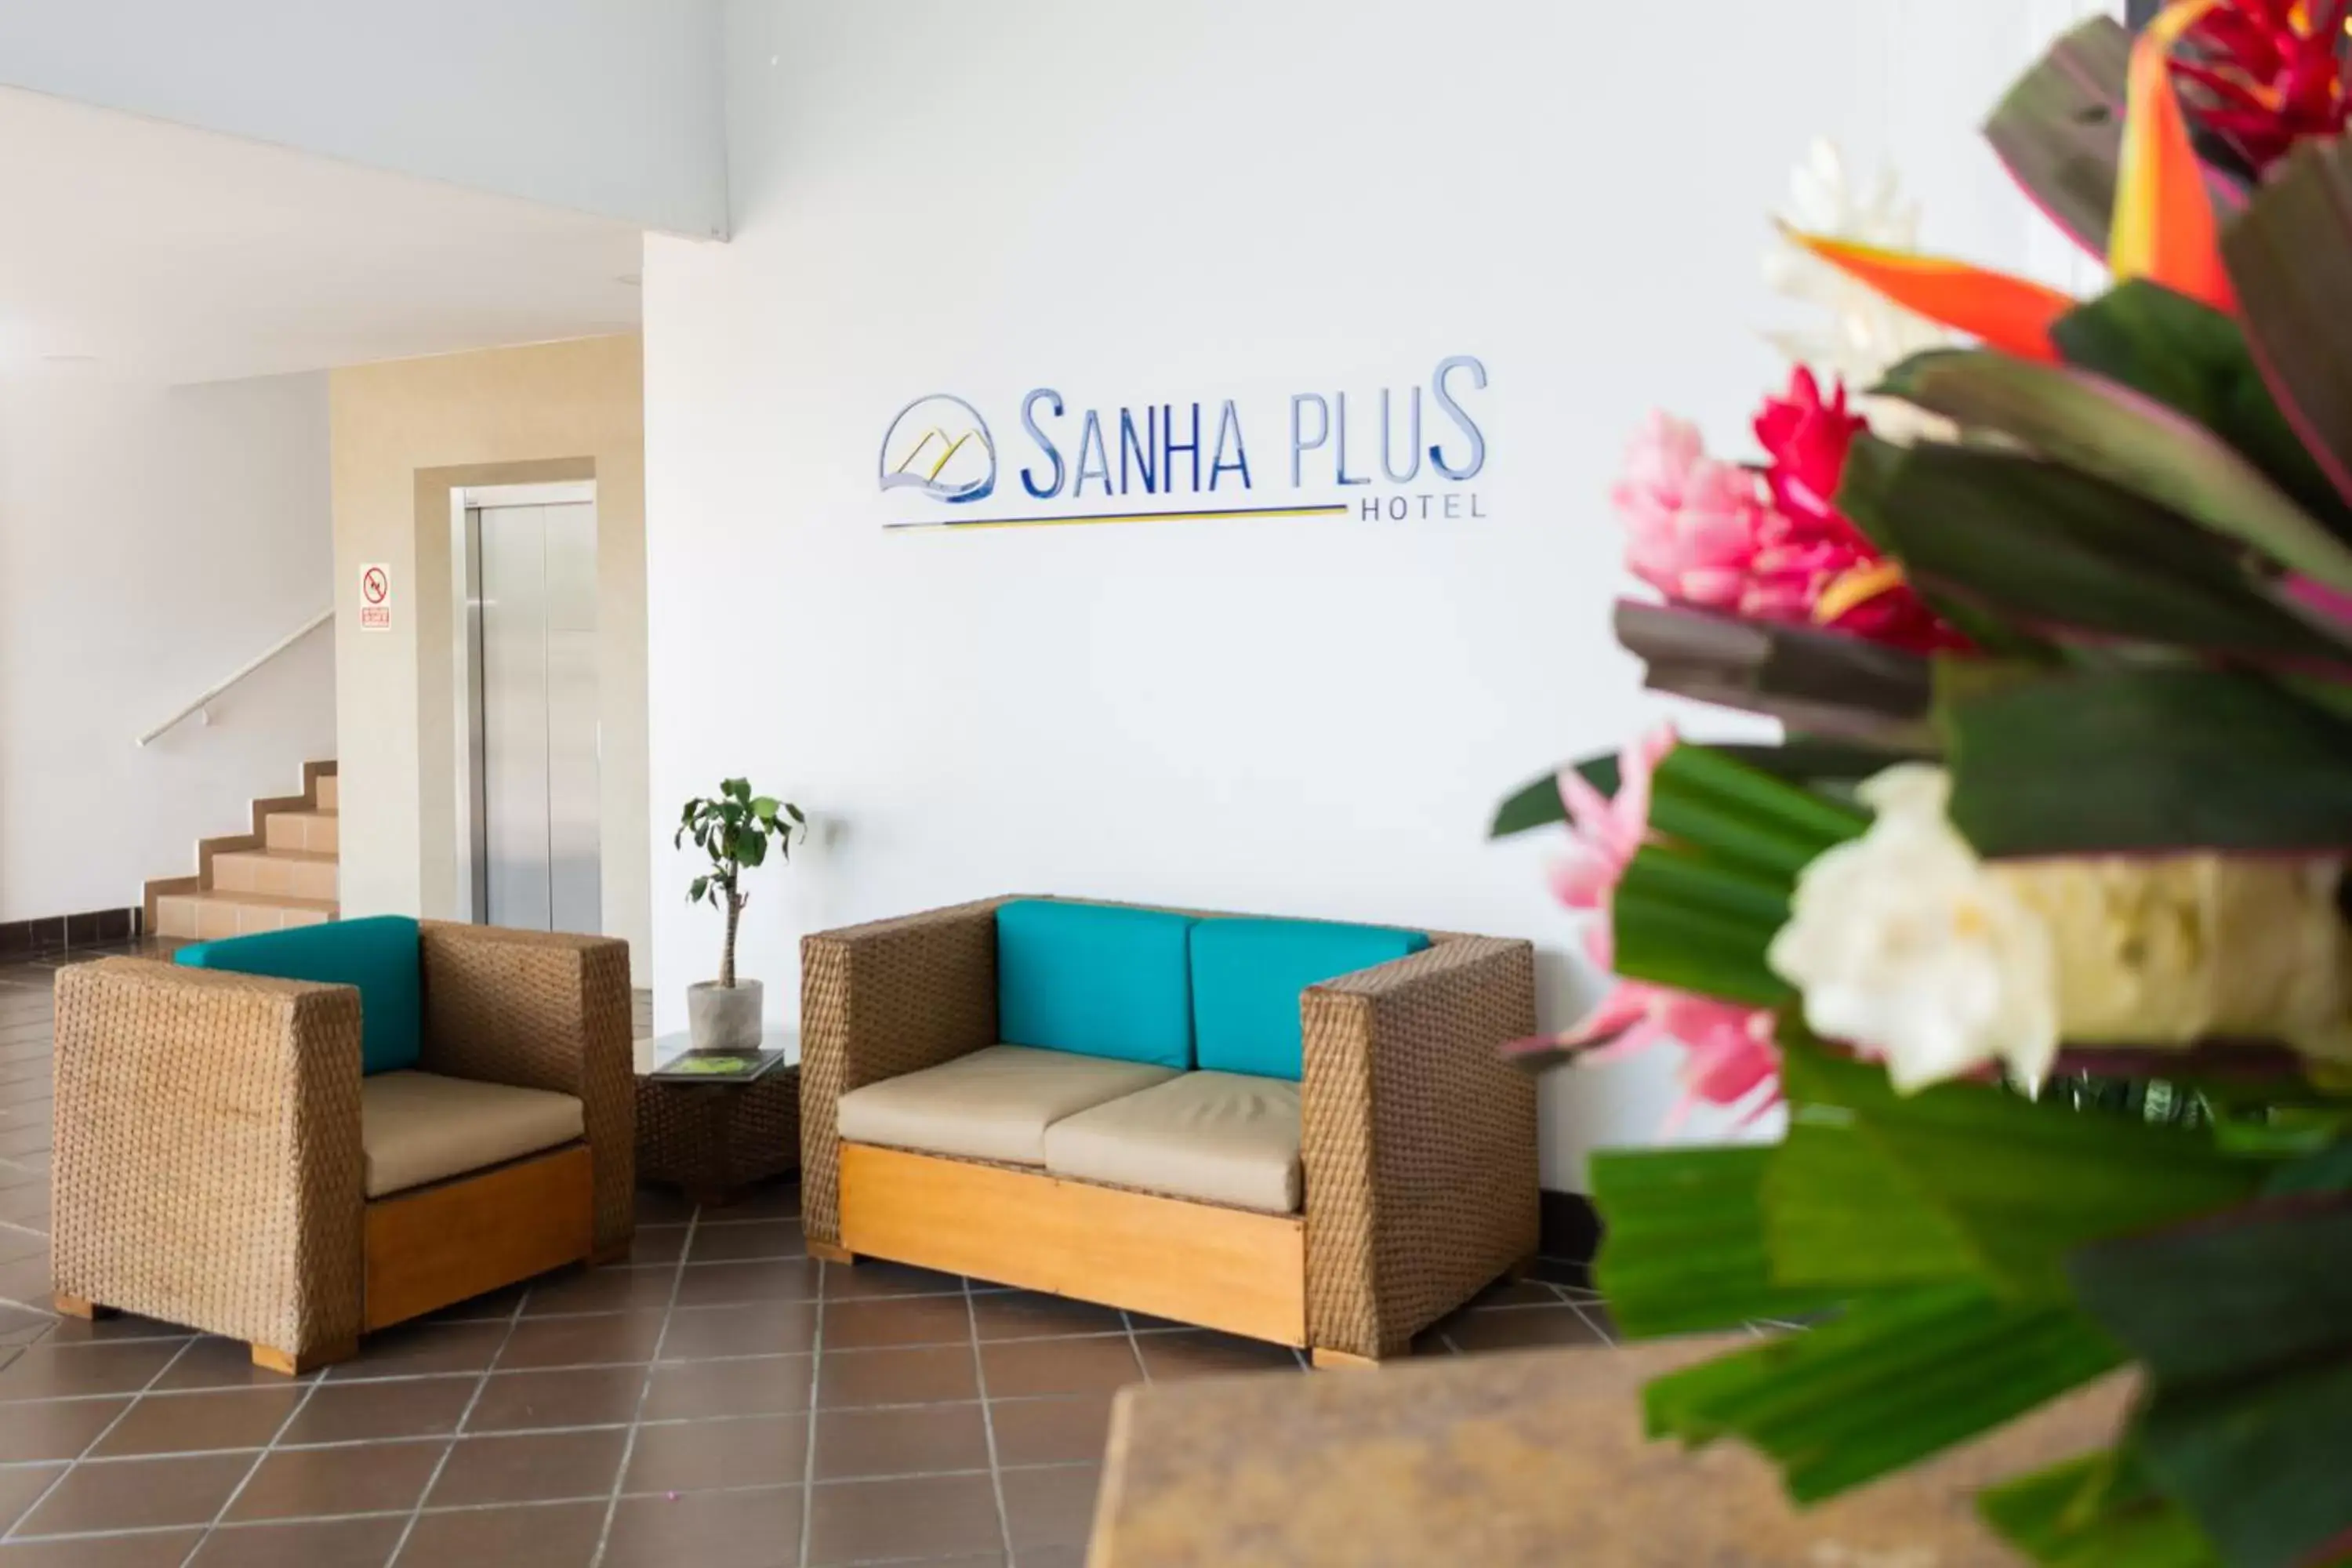 Lobby or reception in Sanha Plus Hotel